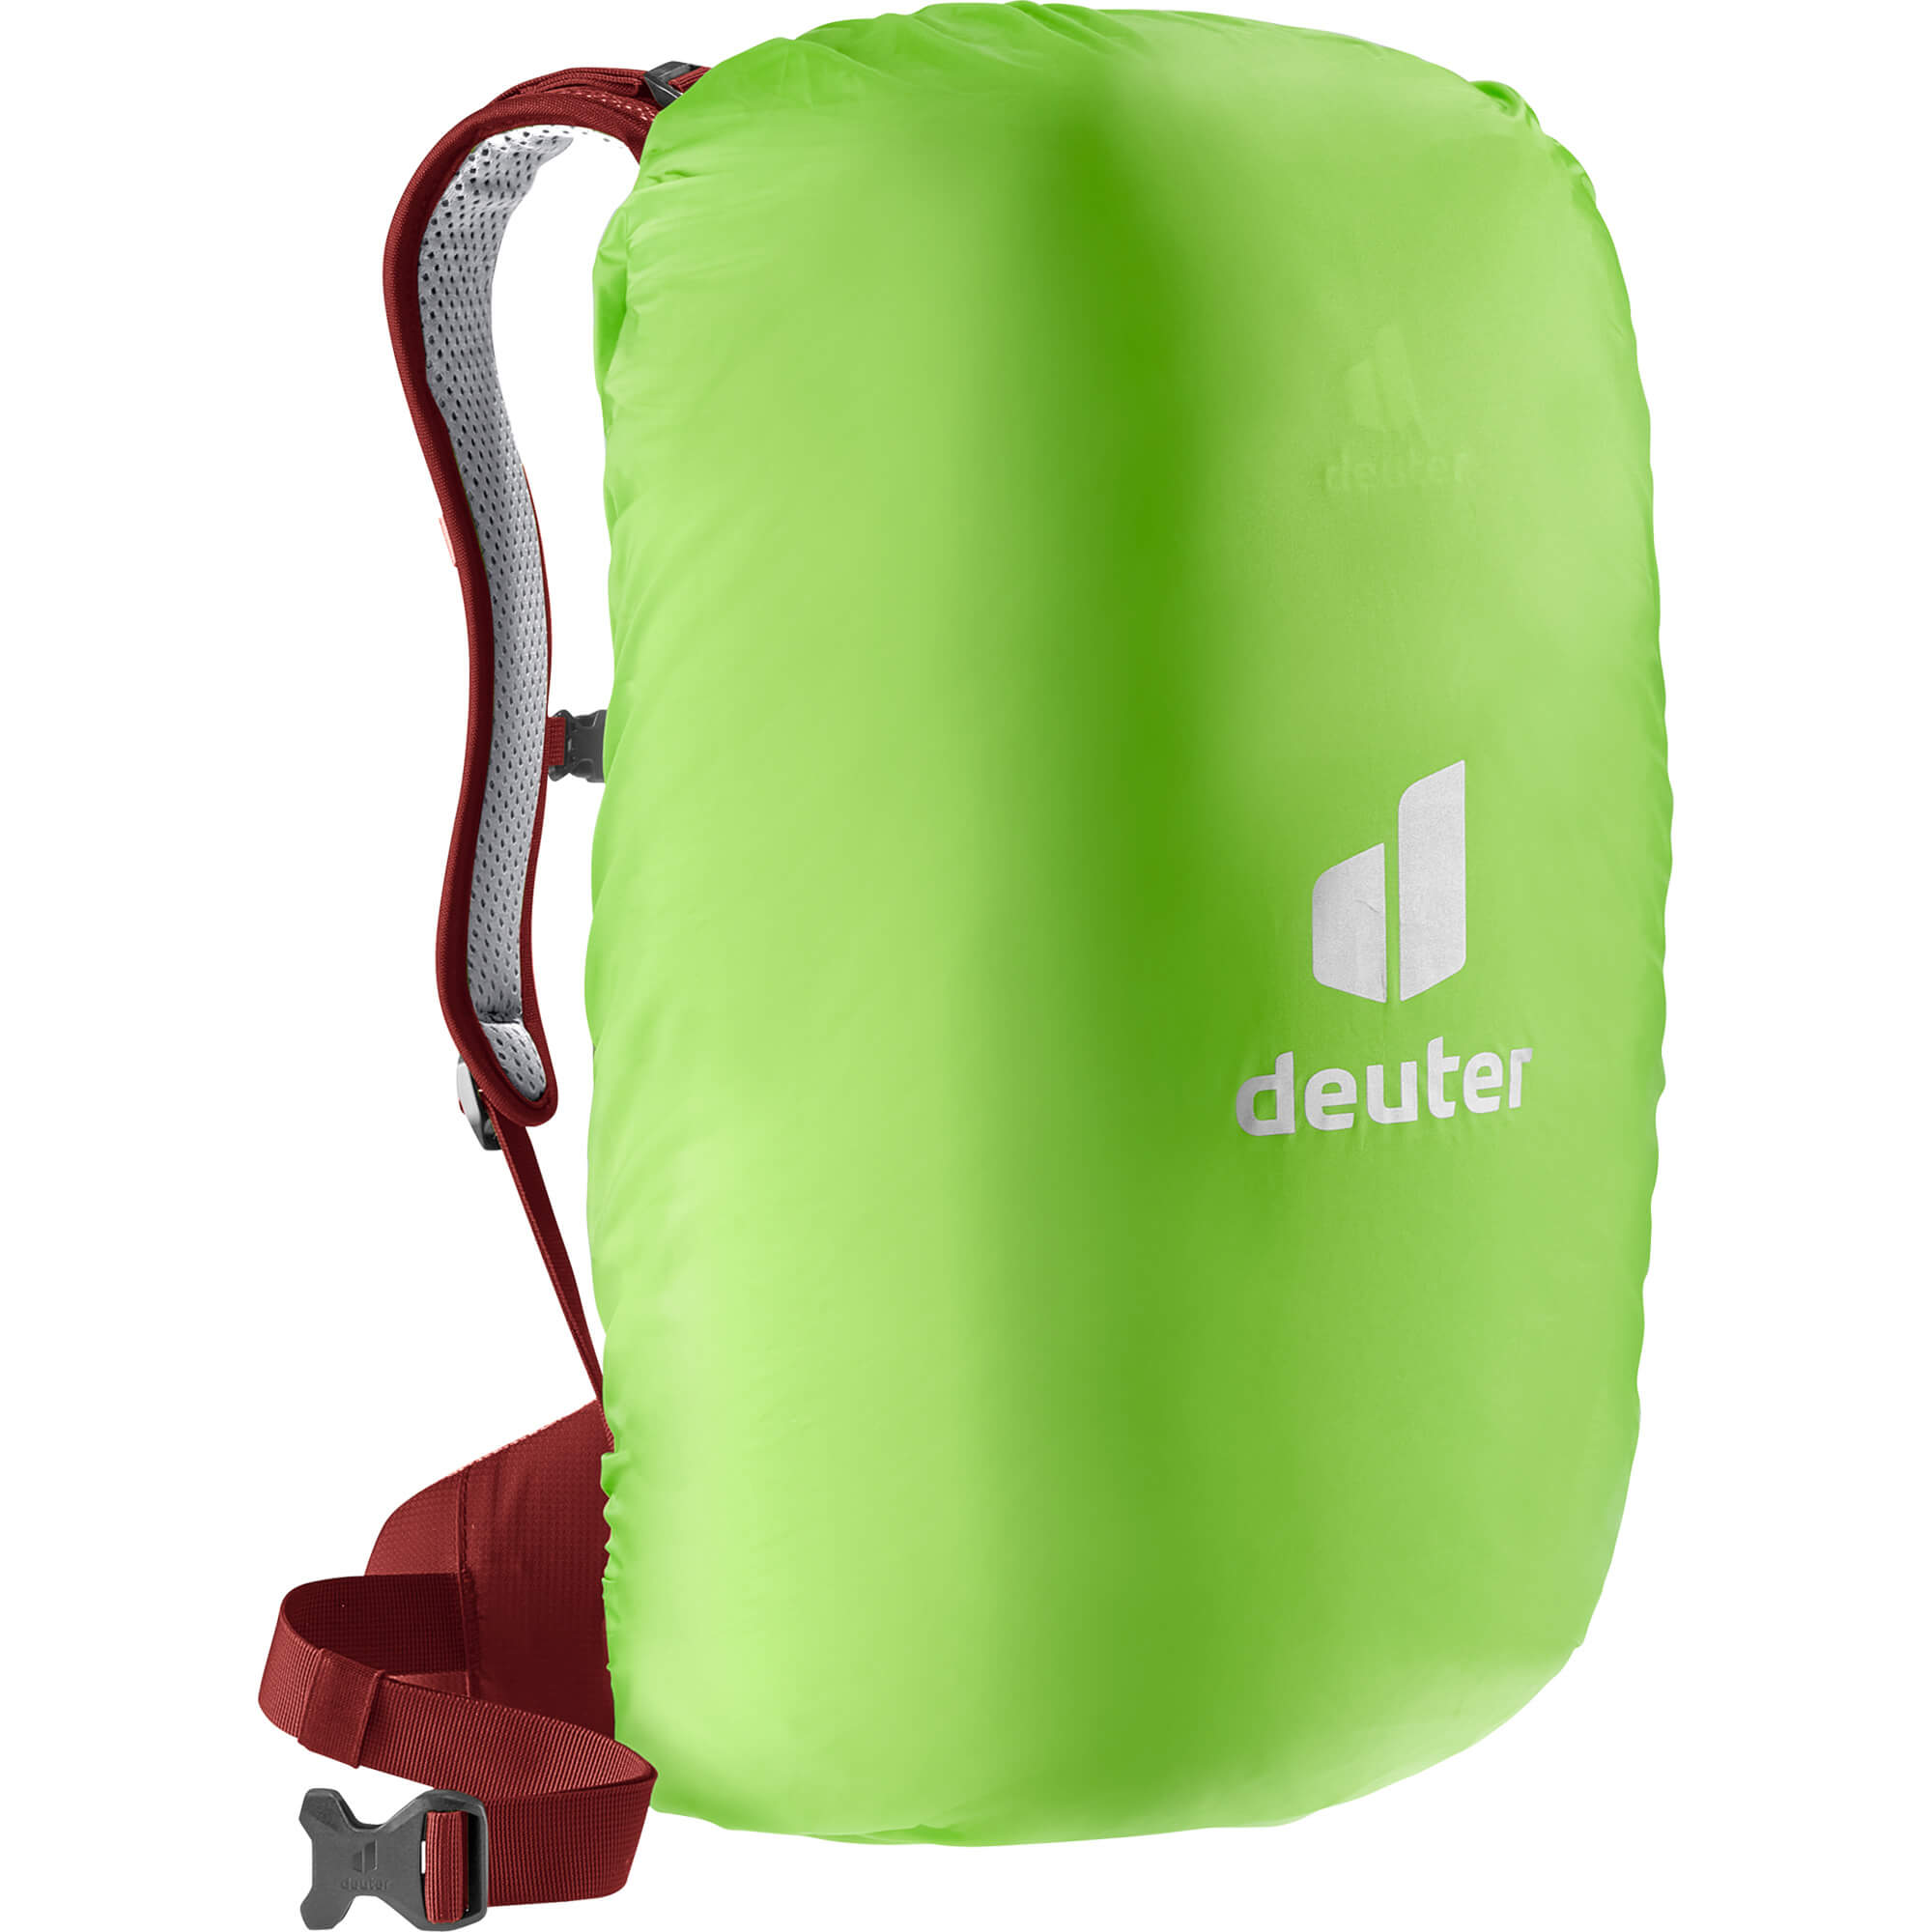 Deuter Futura 23 Day Pack/Hiking Backpack